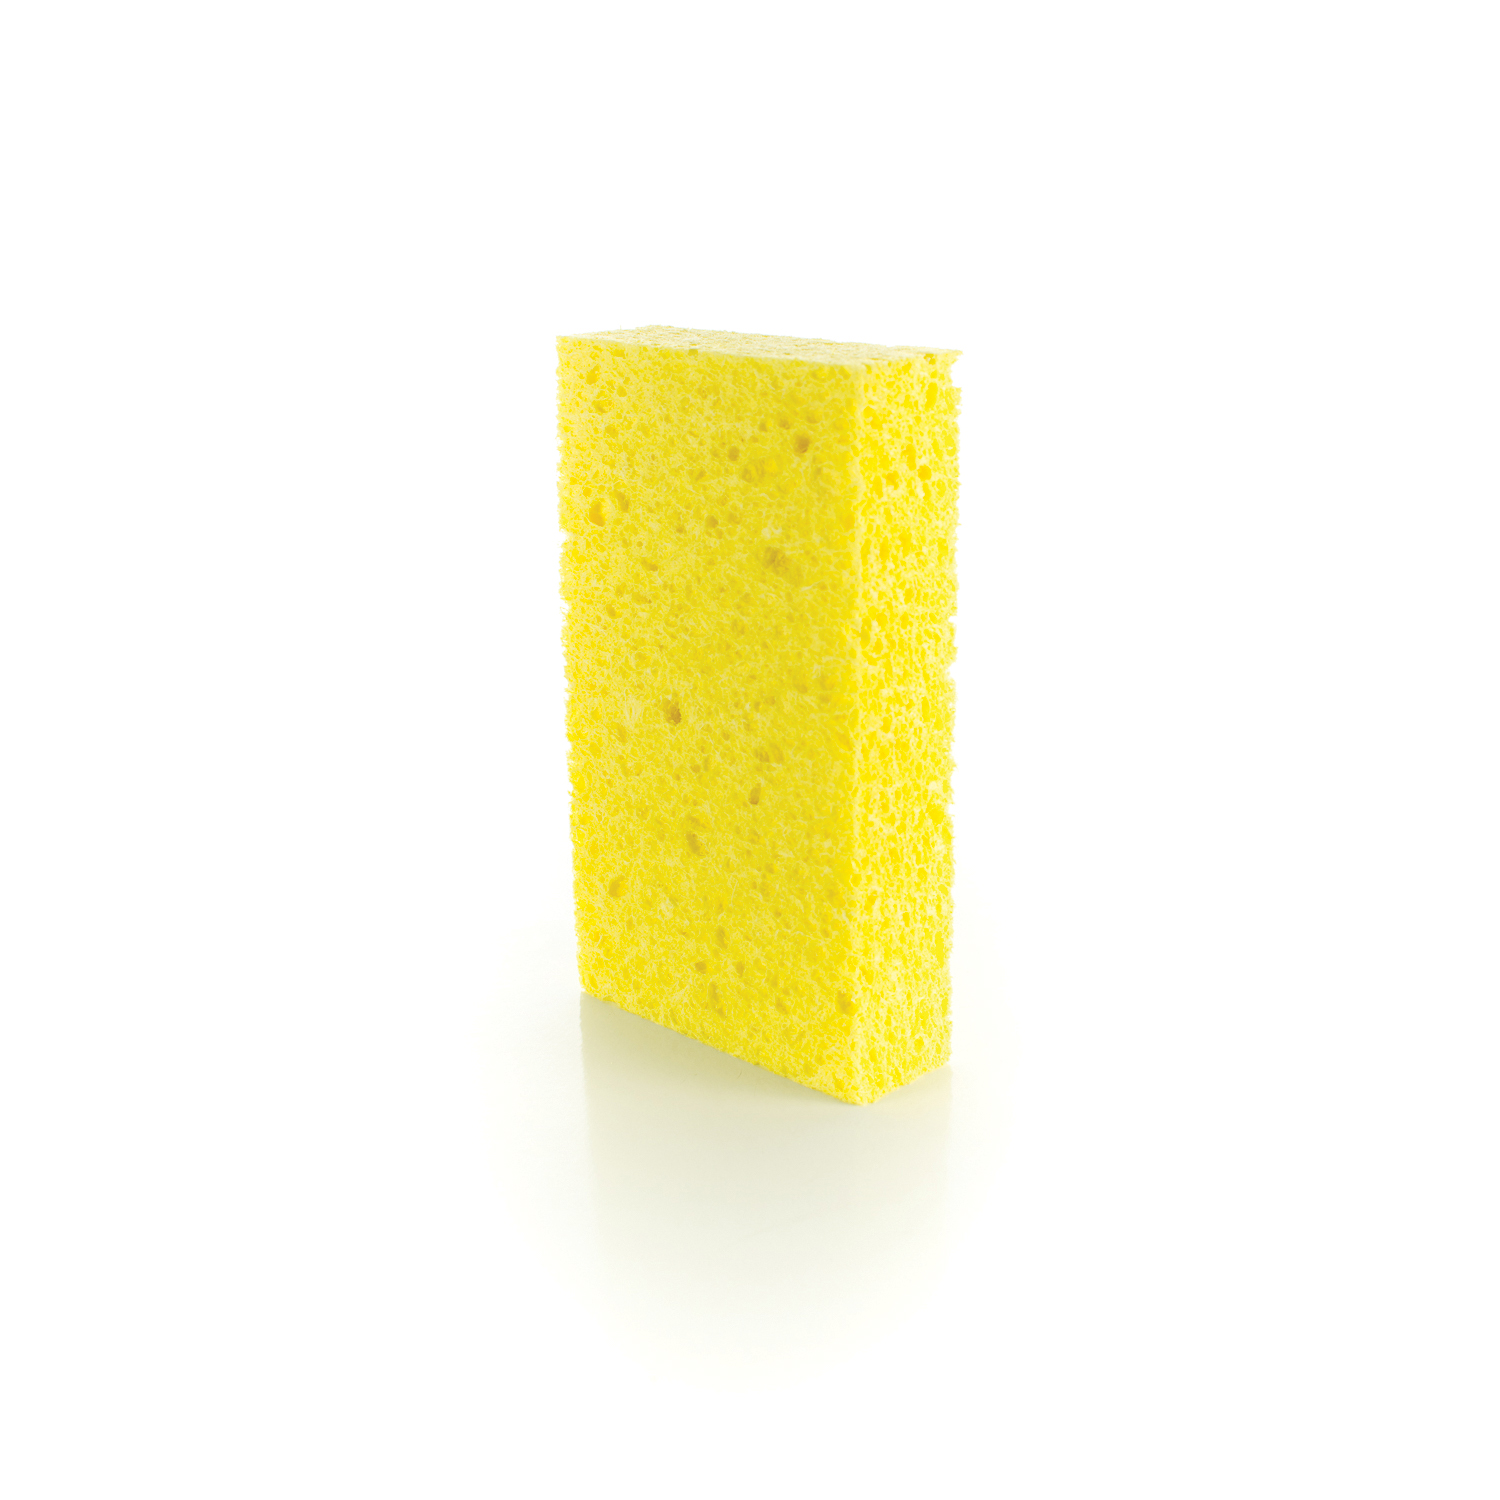 PASCO 5185 Large Sponge, 7-1/2 in L x 4-1/2 in W x 2-1/16 in THK, Cellulose, Natural